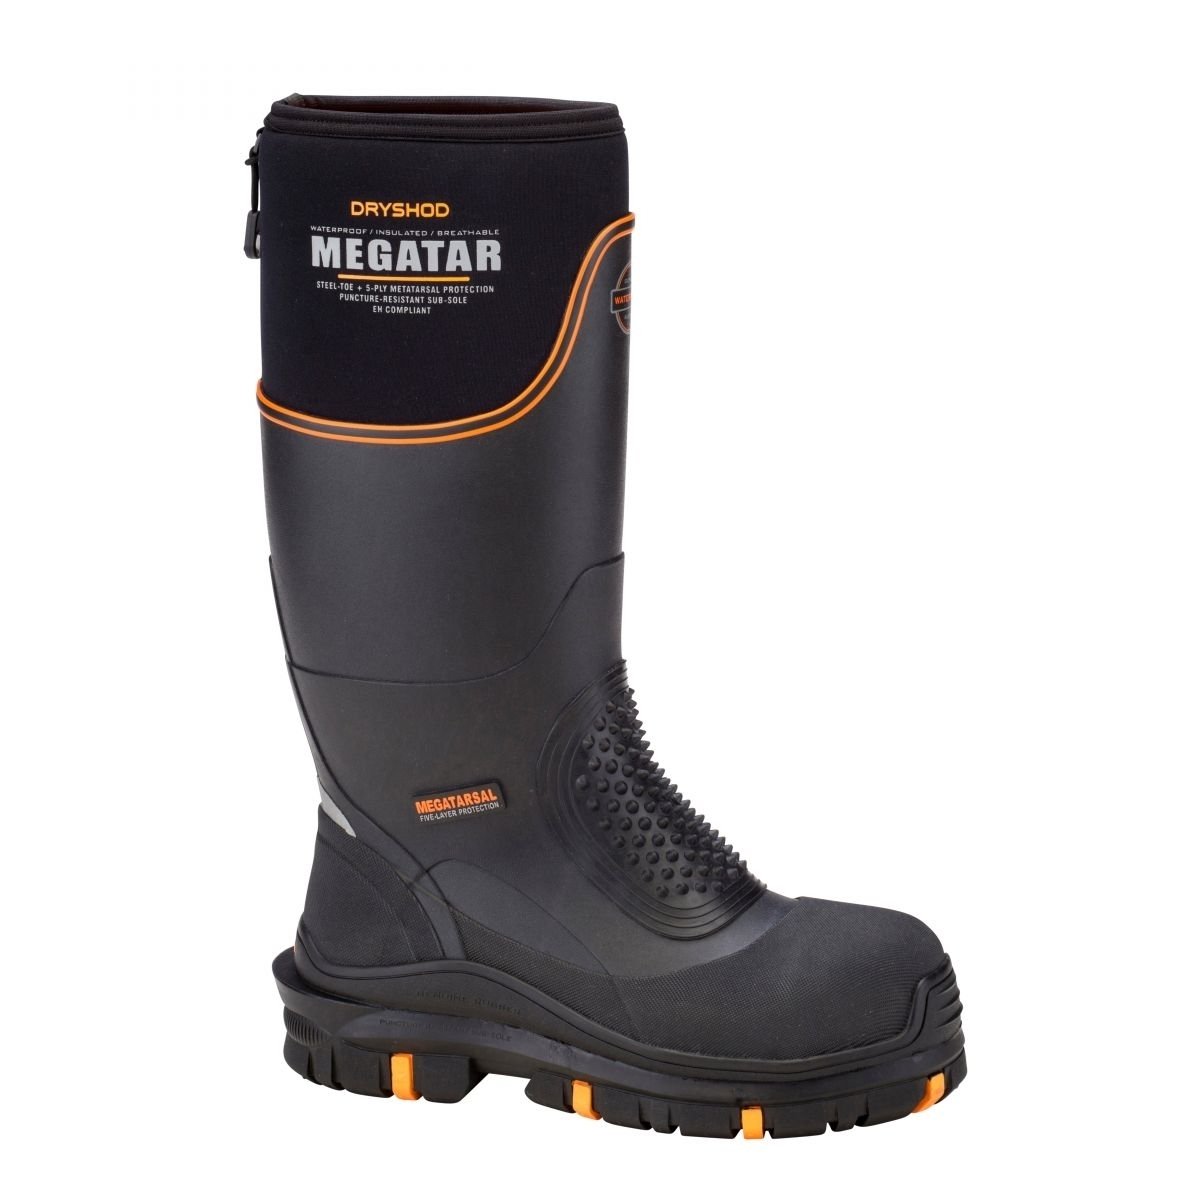 Dryshod Men's Megatar Steel Toe Metatarsal Guard Work Boot Black - MEG-MH-BK ONE SIZE BLACK/ORANGE - BLACK/ORANGE, 8